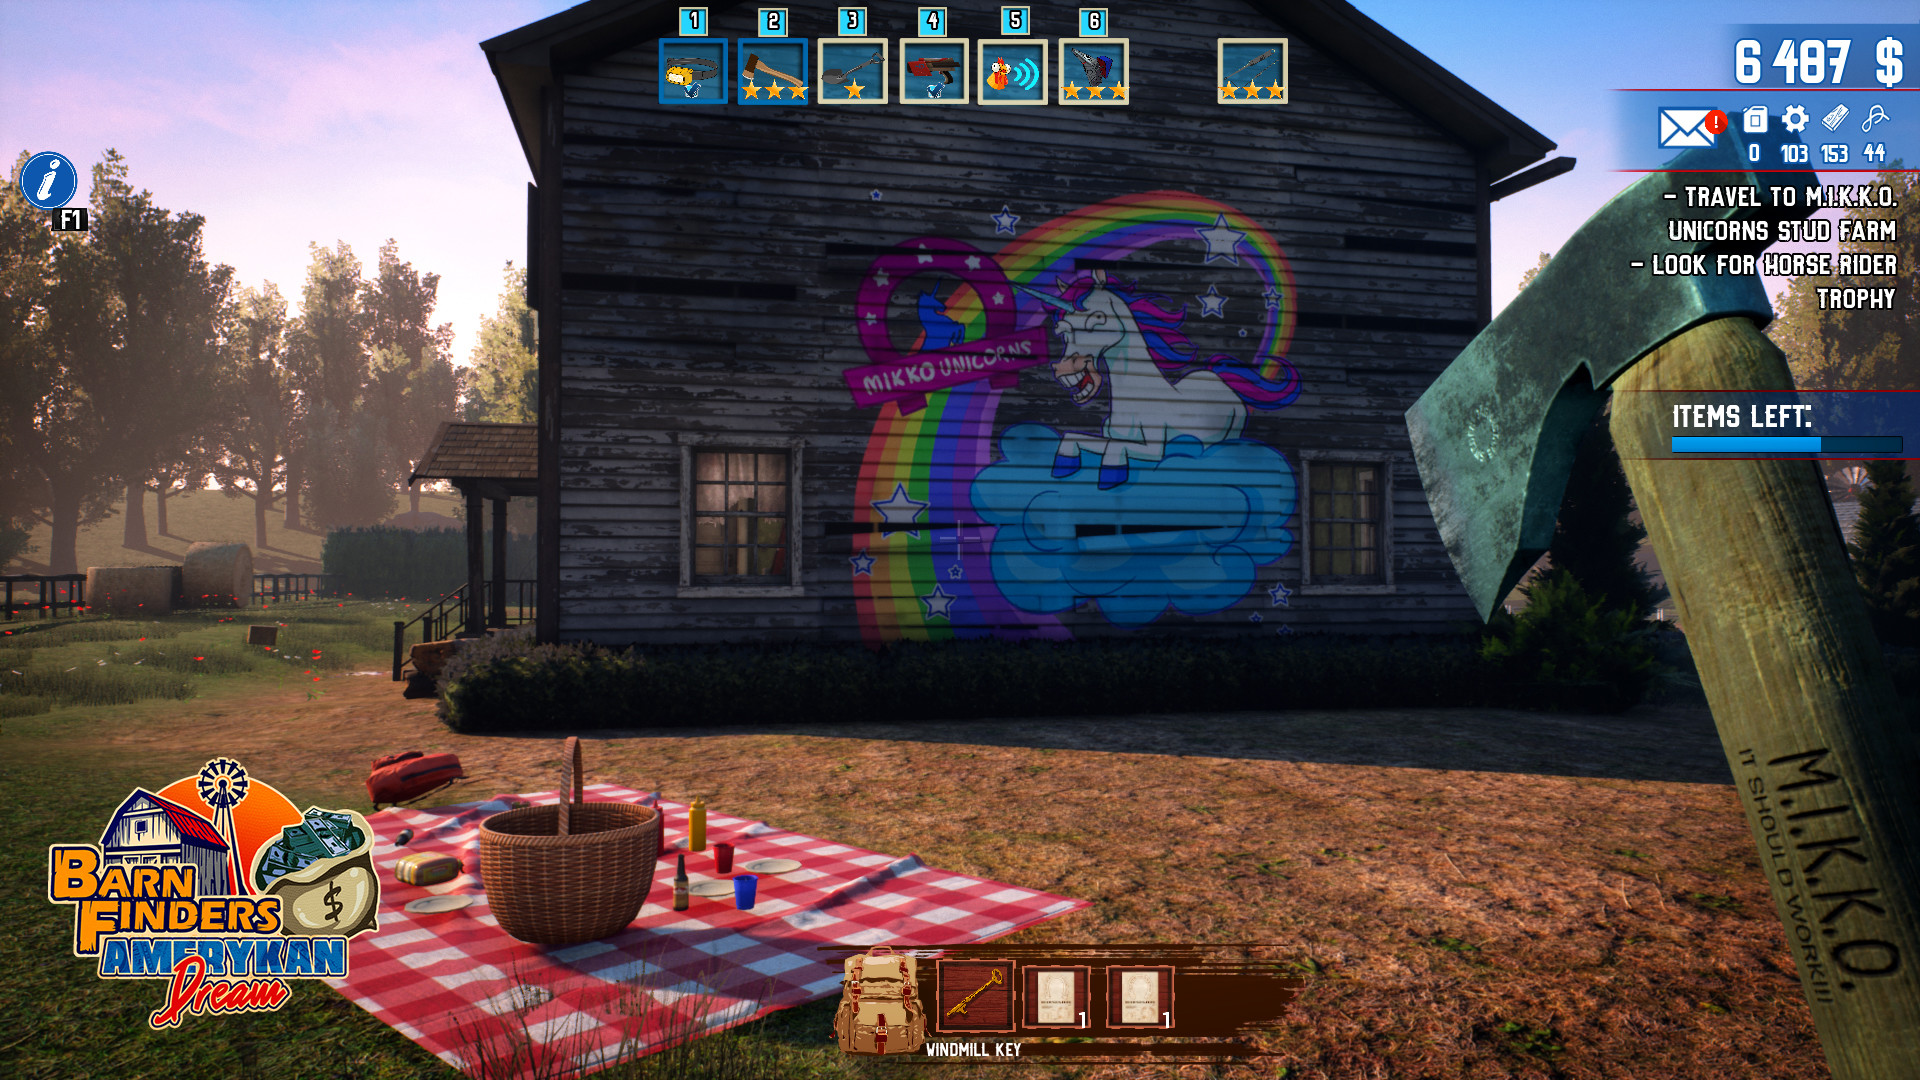 Barn Finders - Amerykan Dream DLC Steam CD Key